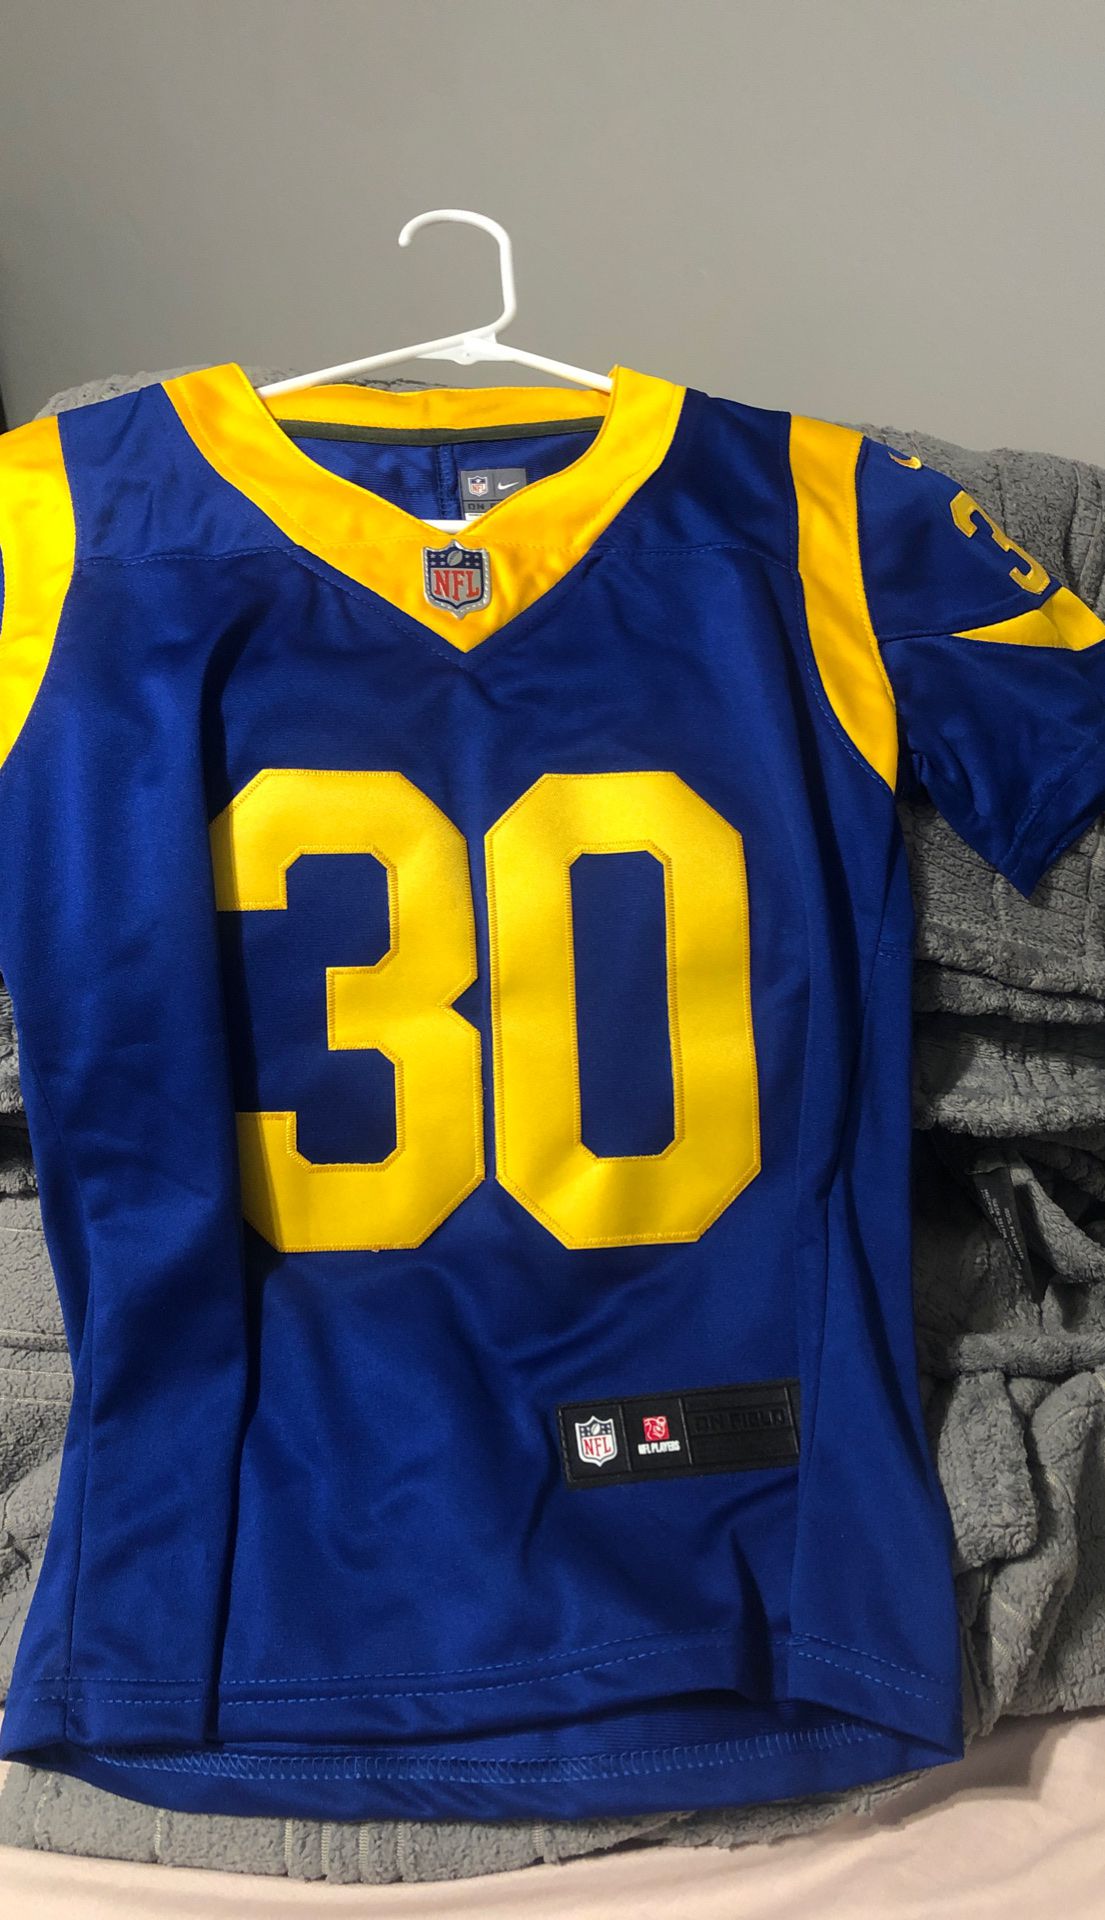 NFL Rams jersey